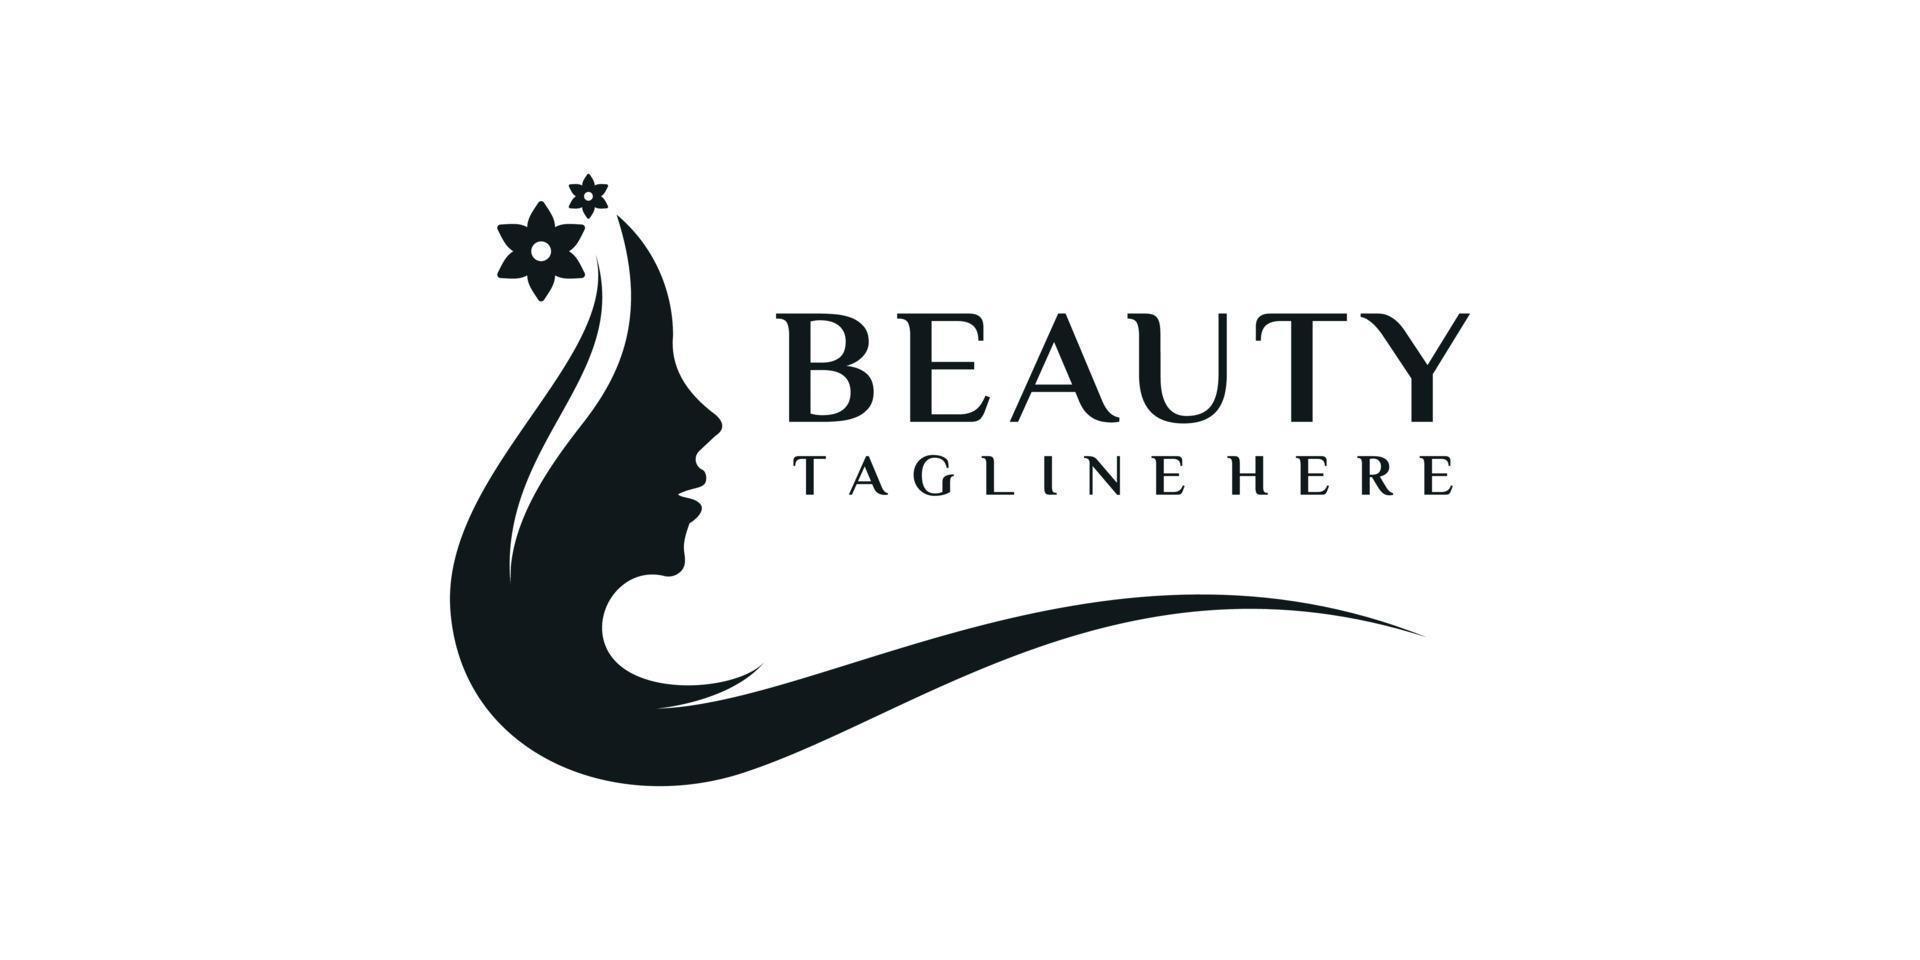 Beauty silhouette woman face design vector